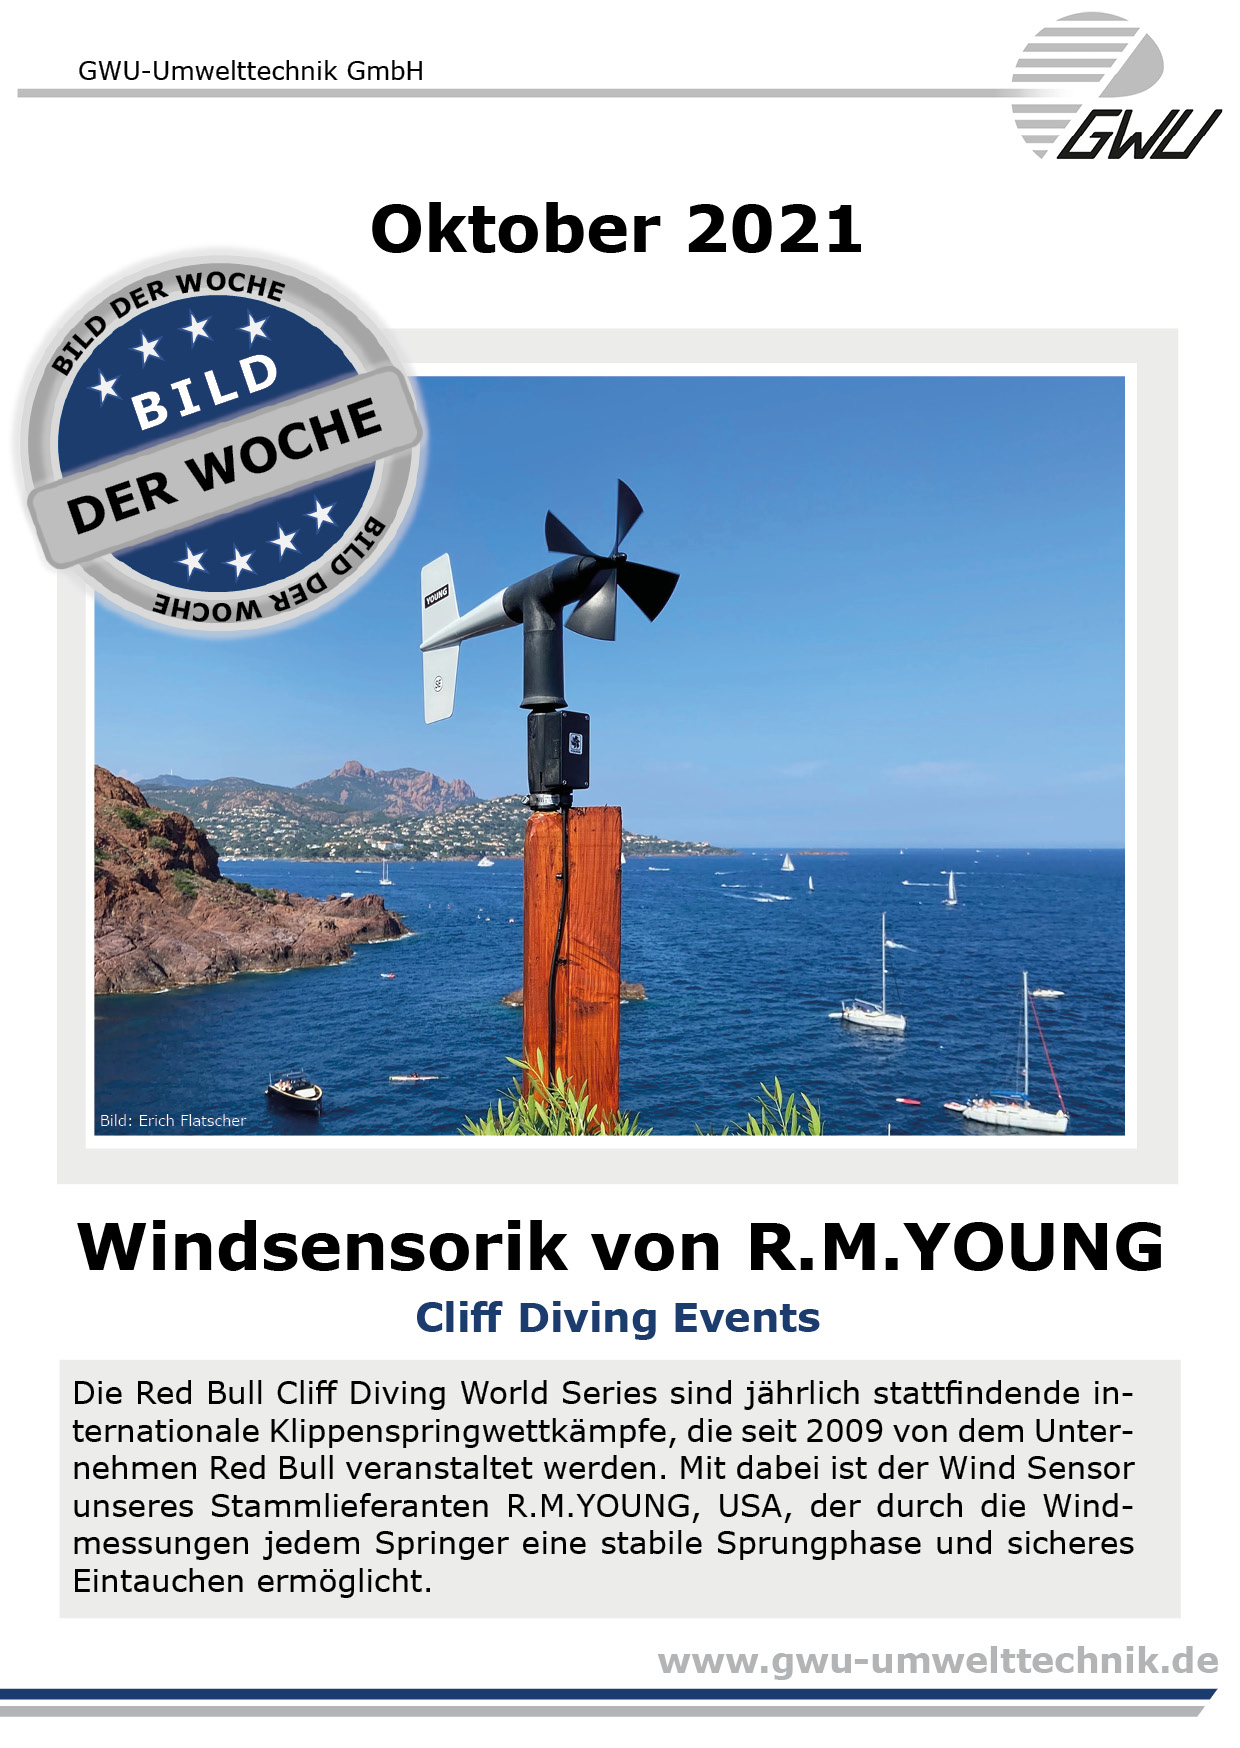 GWU Umwelttechnik Windsensorik Young 2021 10